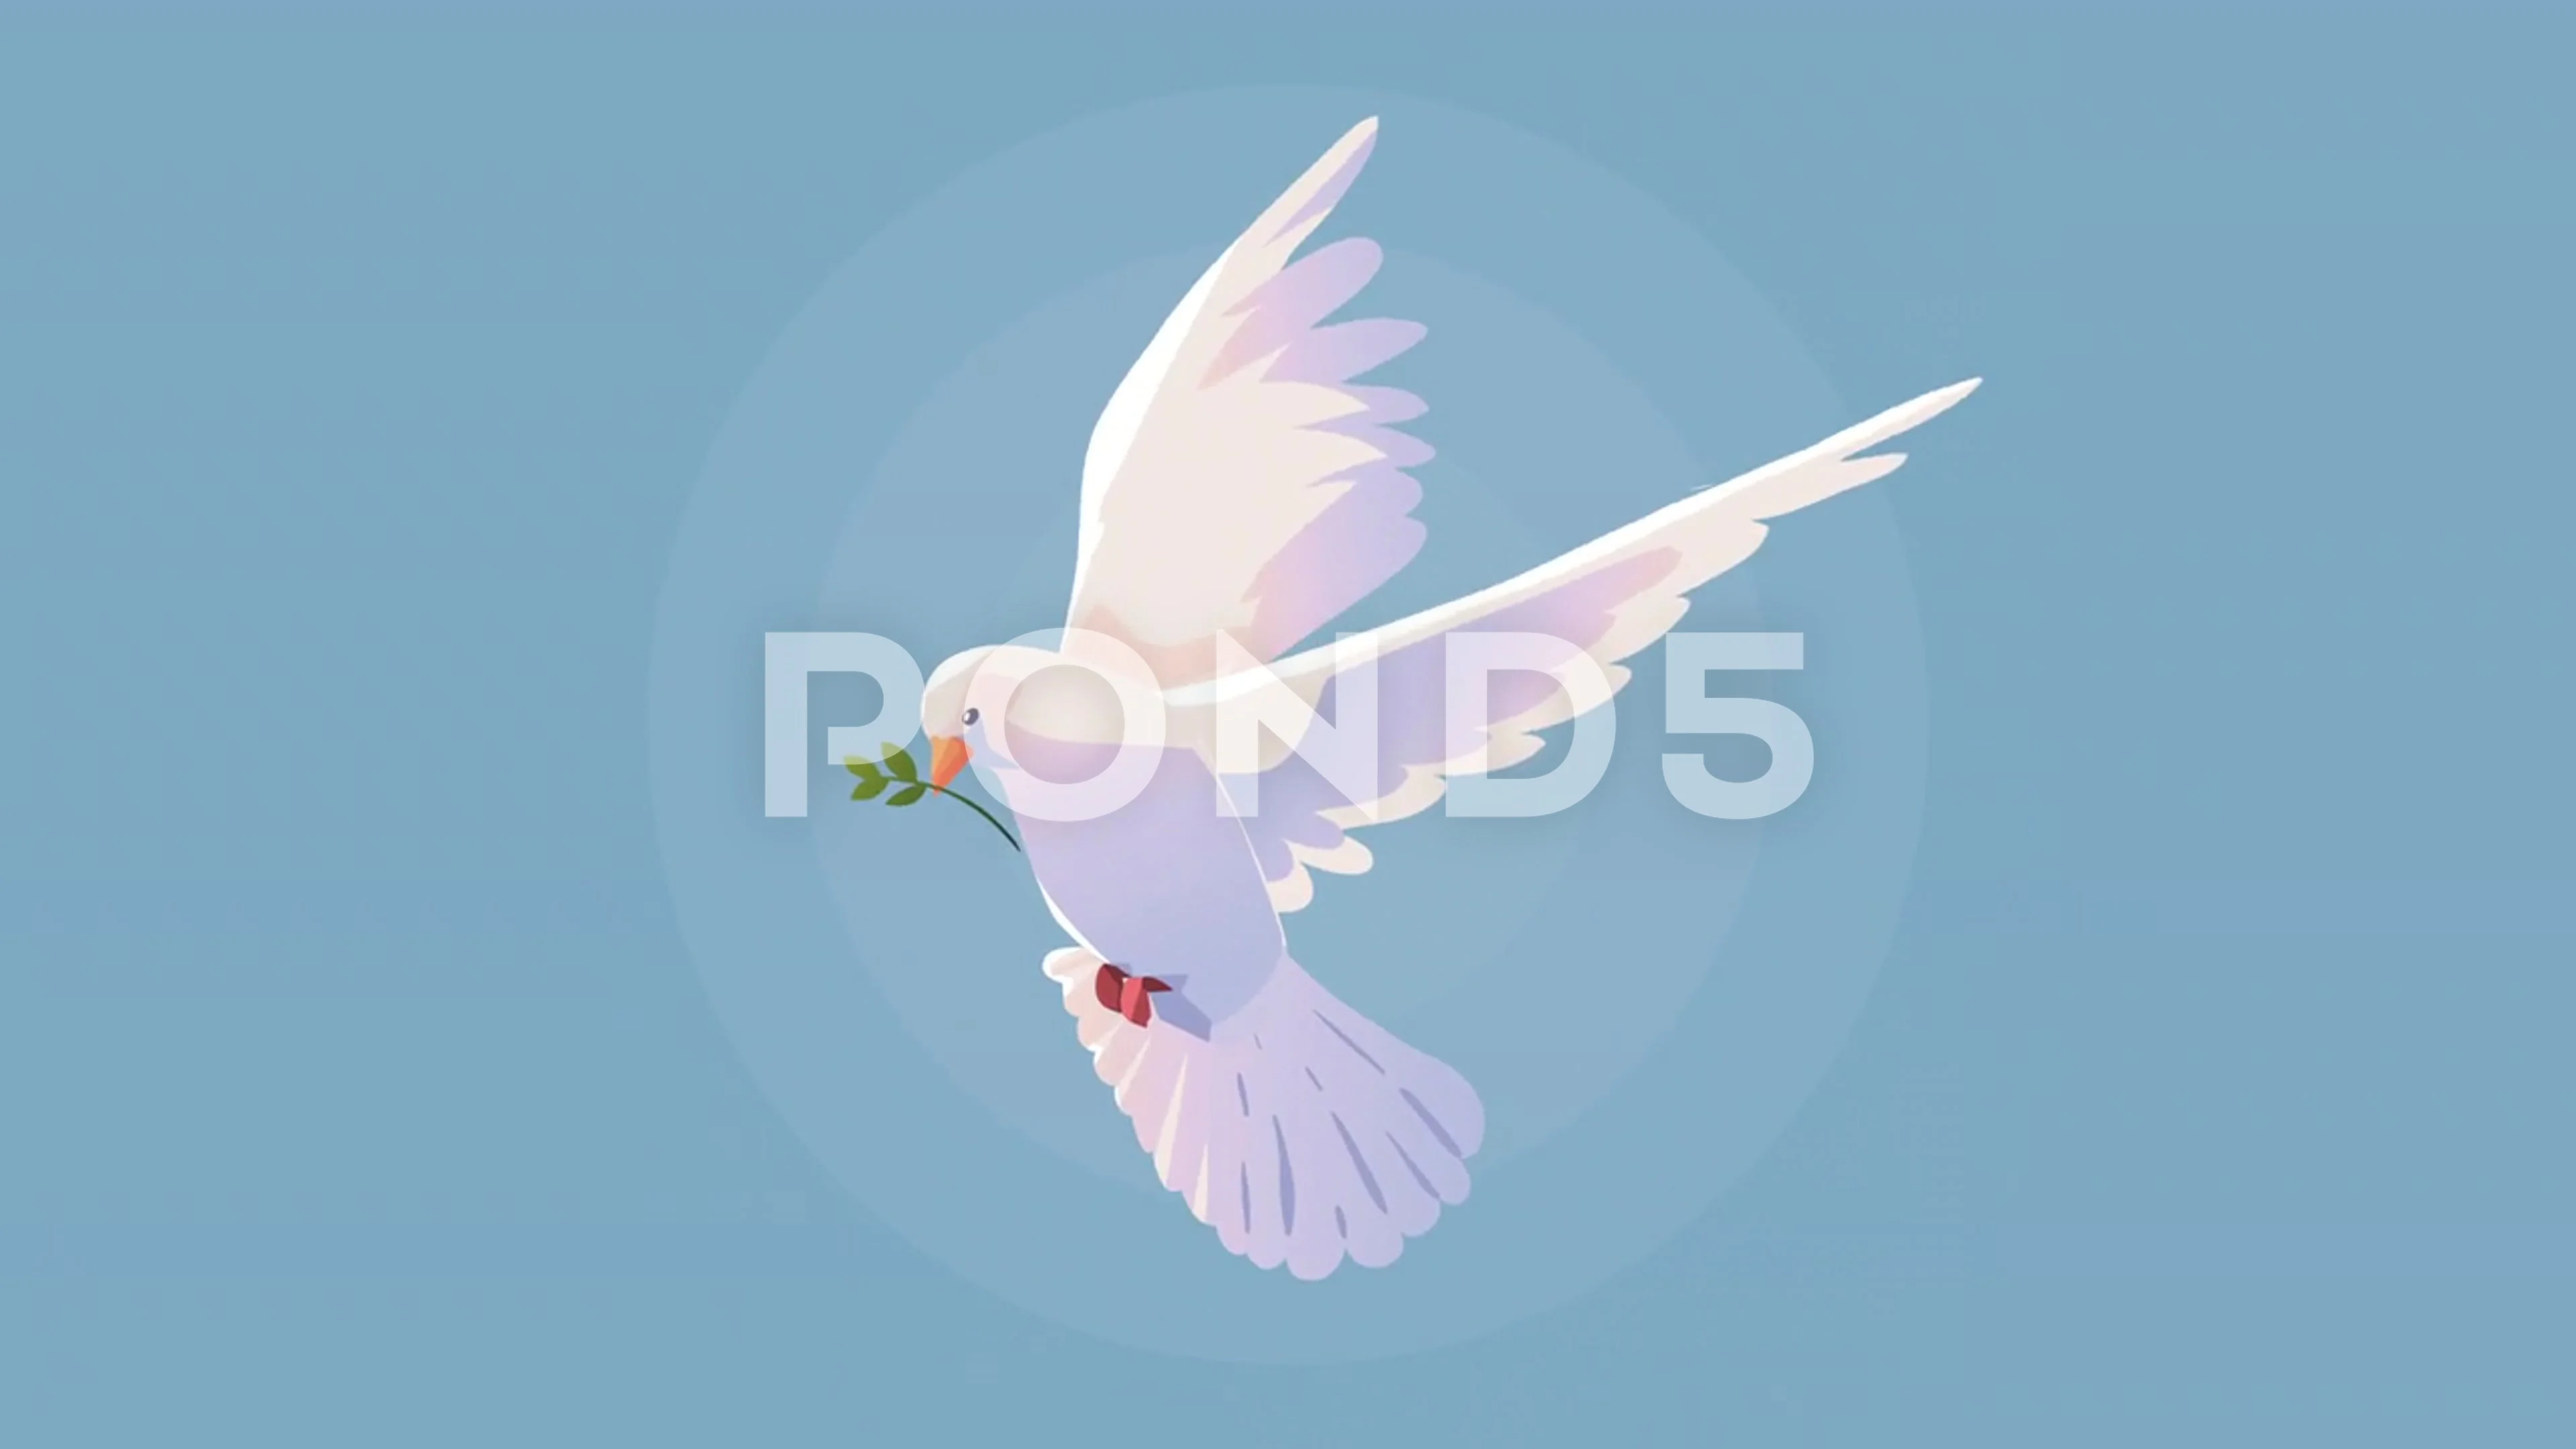 peace dove bird flying animation | Stock Video | Pond5